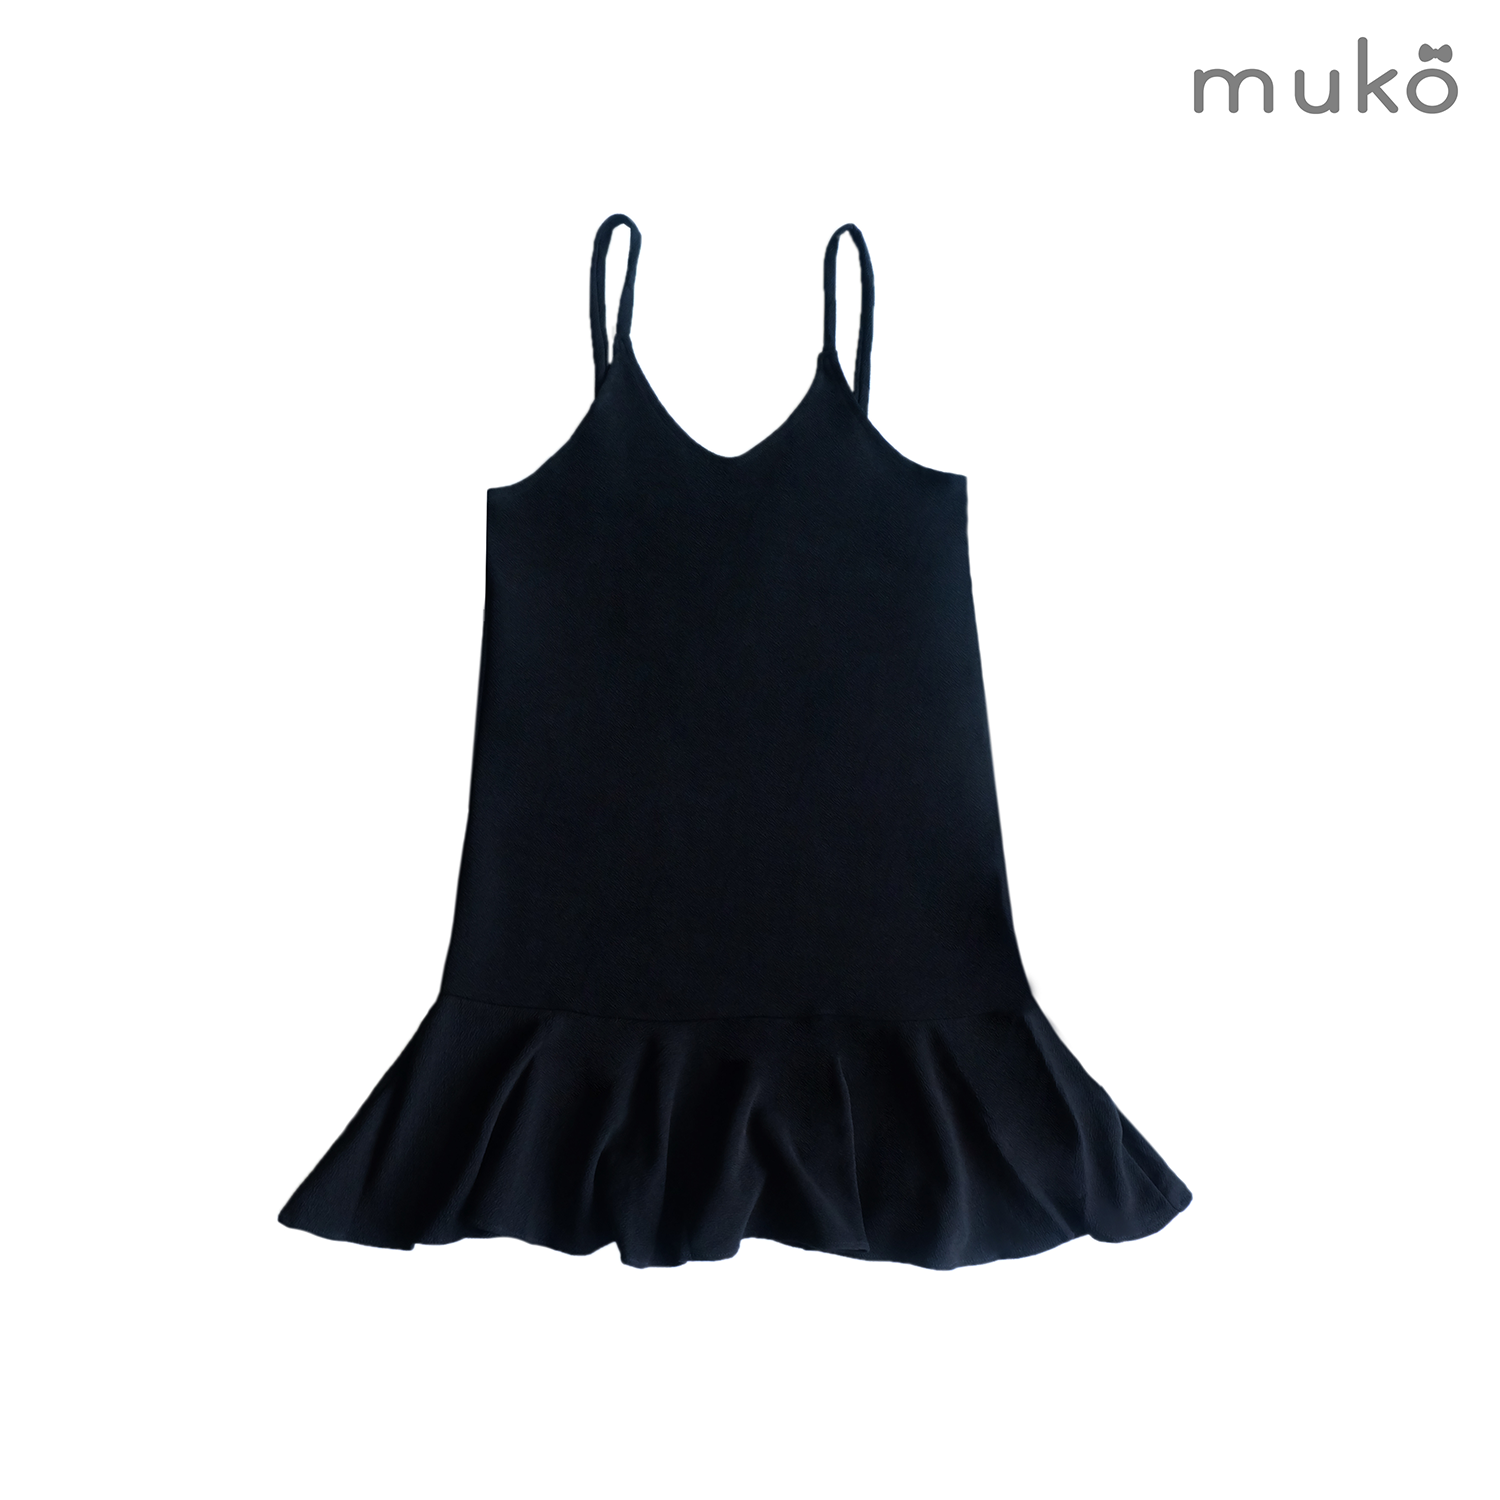 Muko Yuri **กระโปรงเอี๊ยม**อย่างเดียว คลุมท้องหรือจะใส่แฟชั่นสวยๆก็ได้นะคะ DM10-006 สีดำ